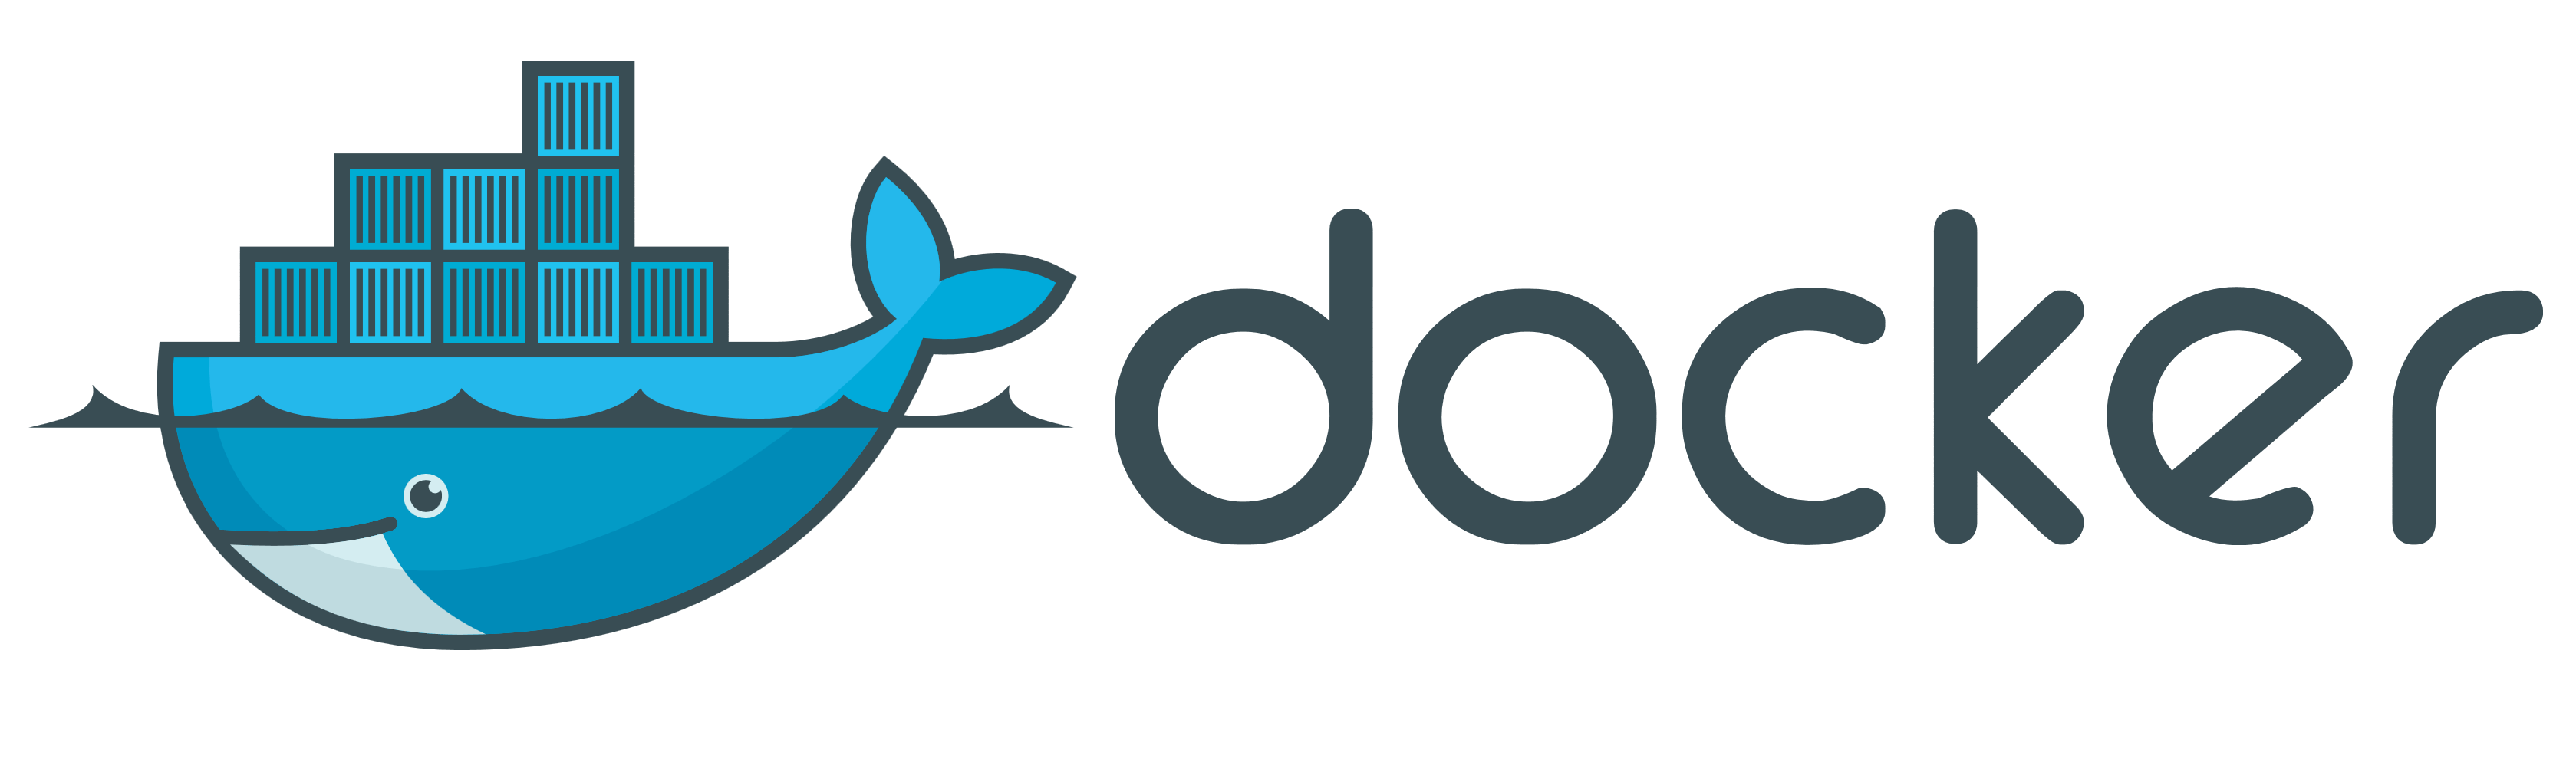 Docker logo, logotype